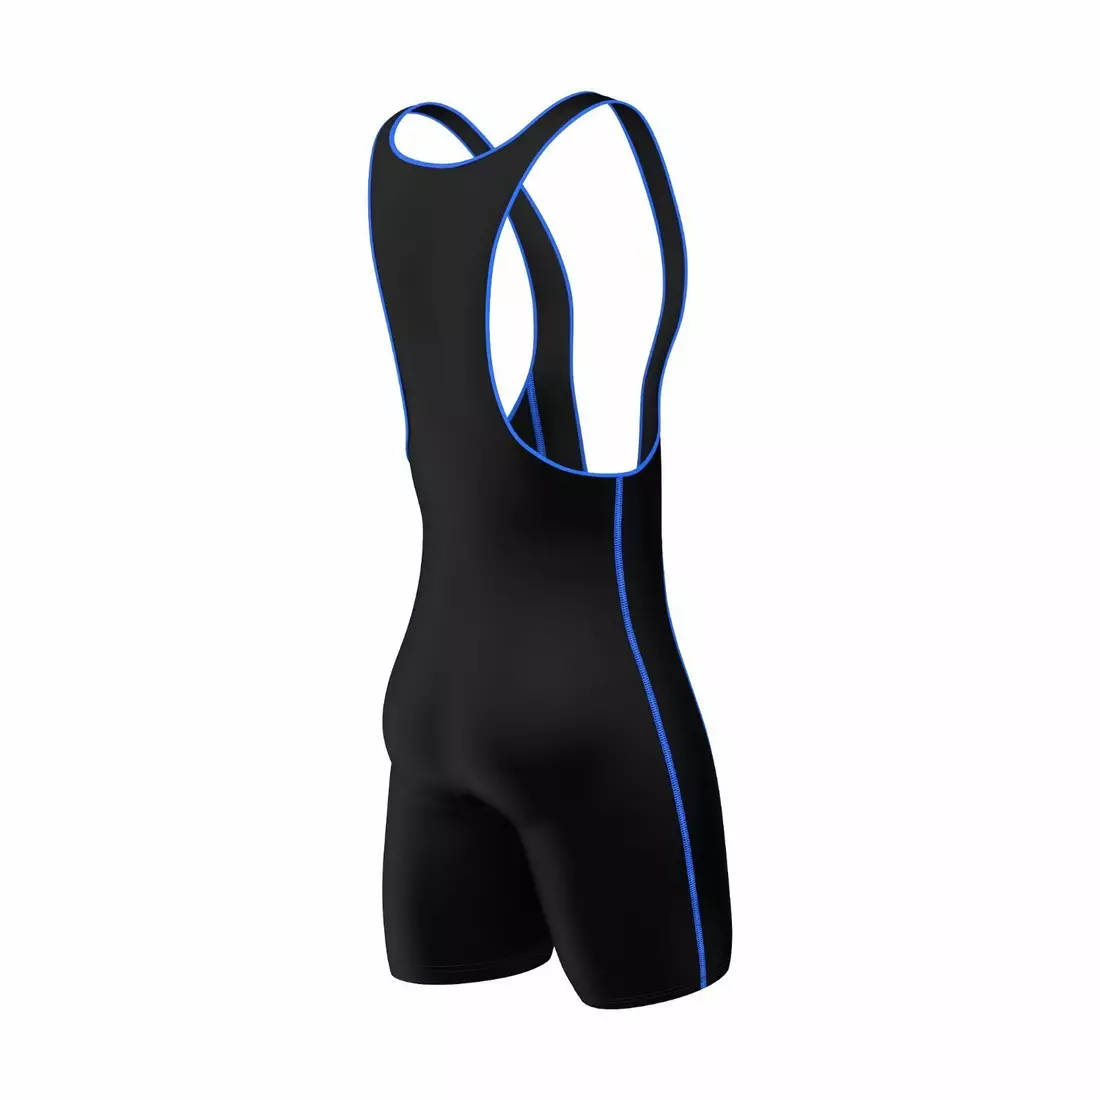 FDX 1610 bib shorts, black and blue